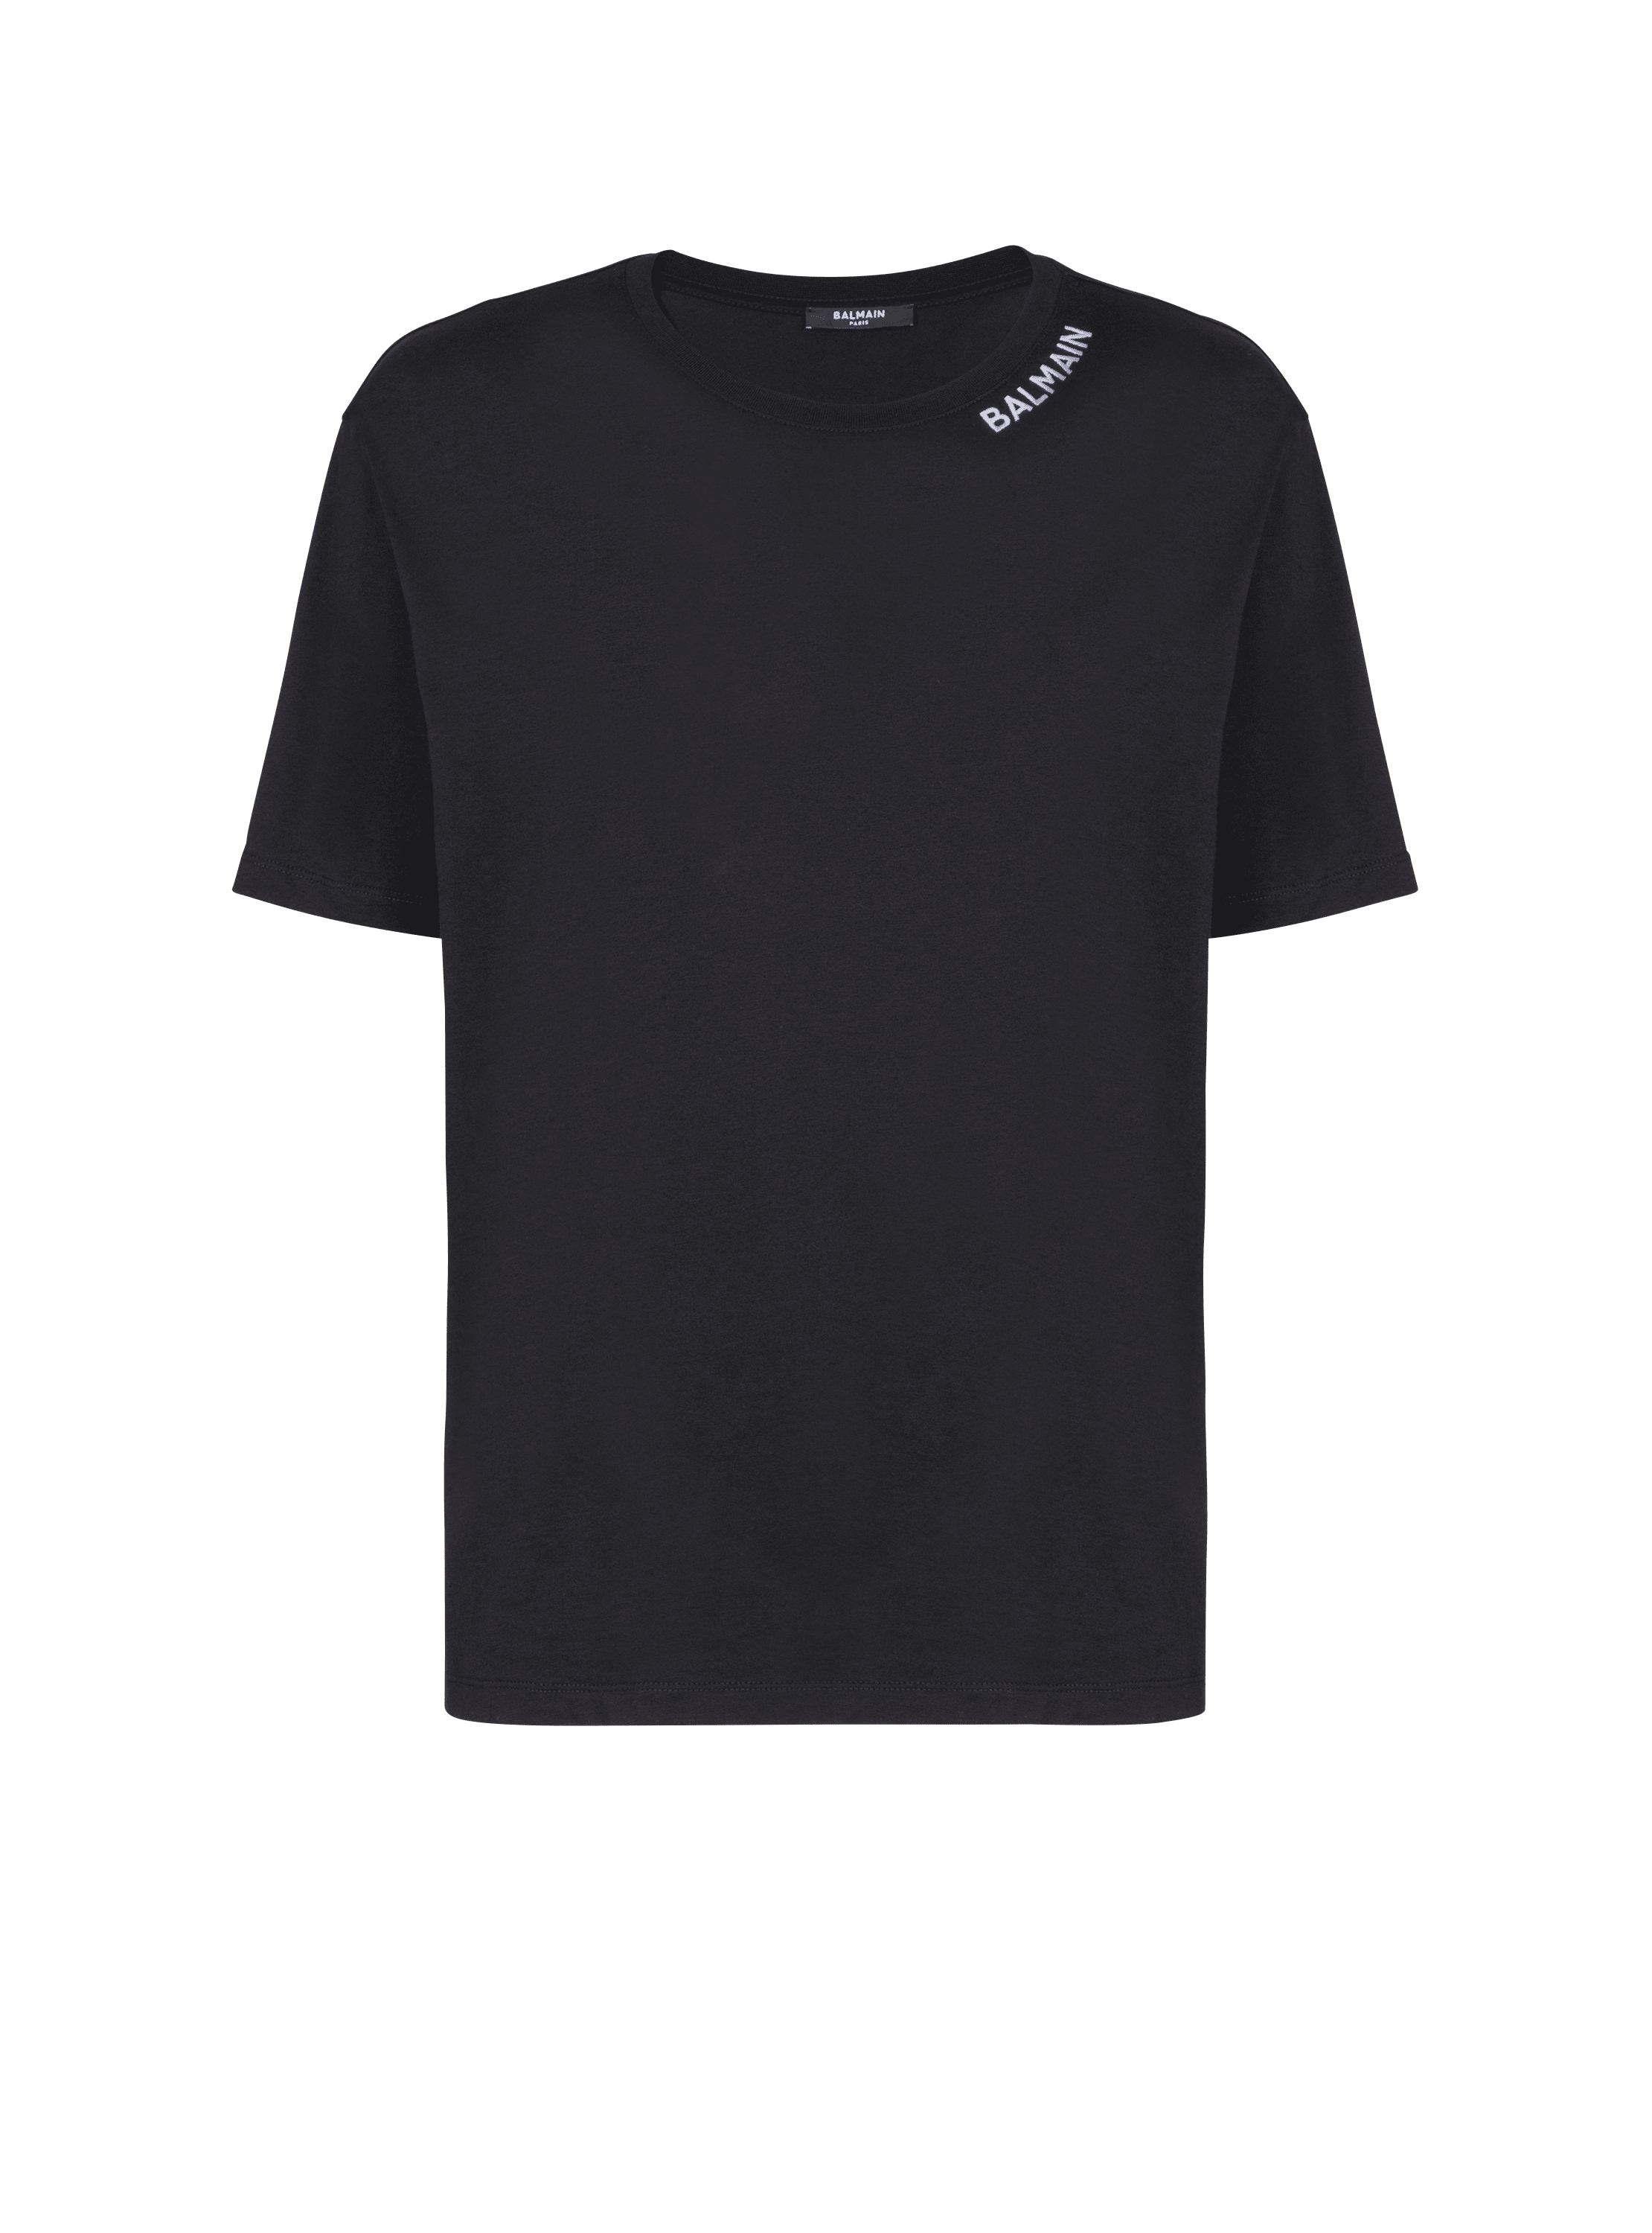 Balmain embroidered T-shirt black - Men | BALMAIN